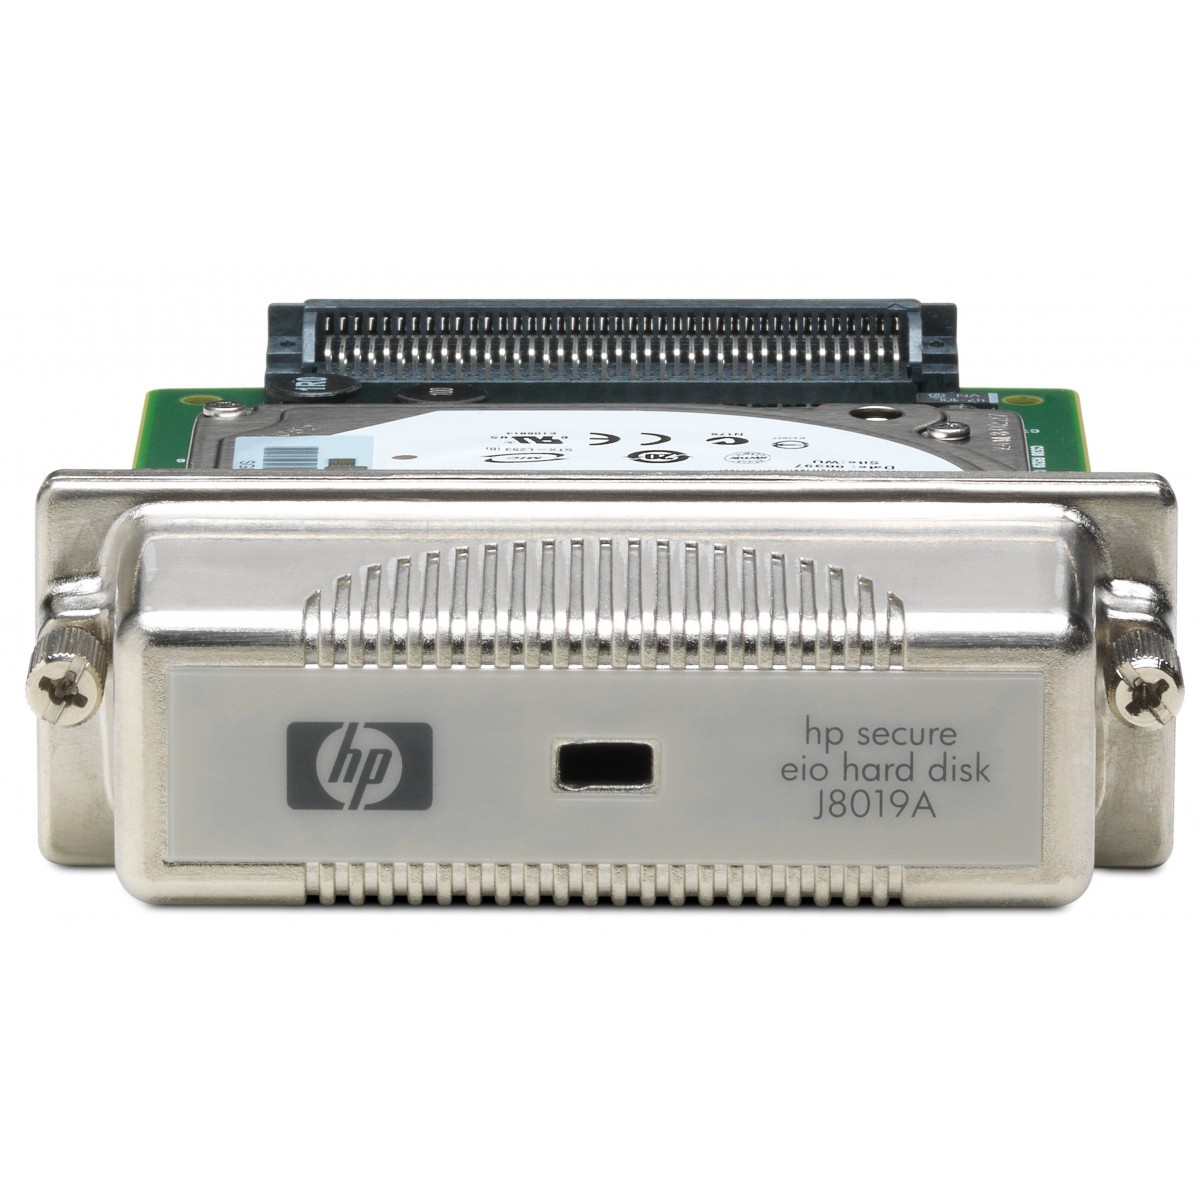 HP High-Performance Secure EIO Hard Disk - 80 GB